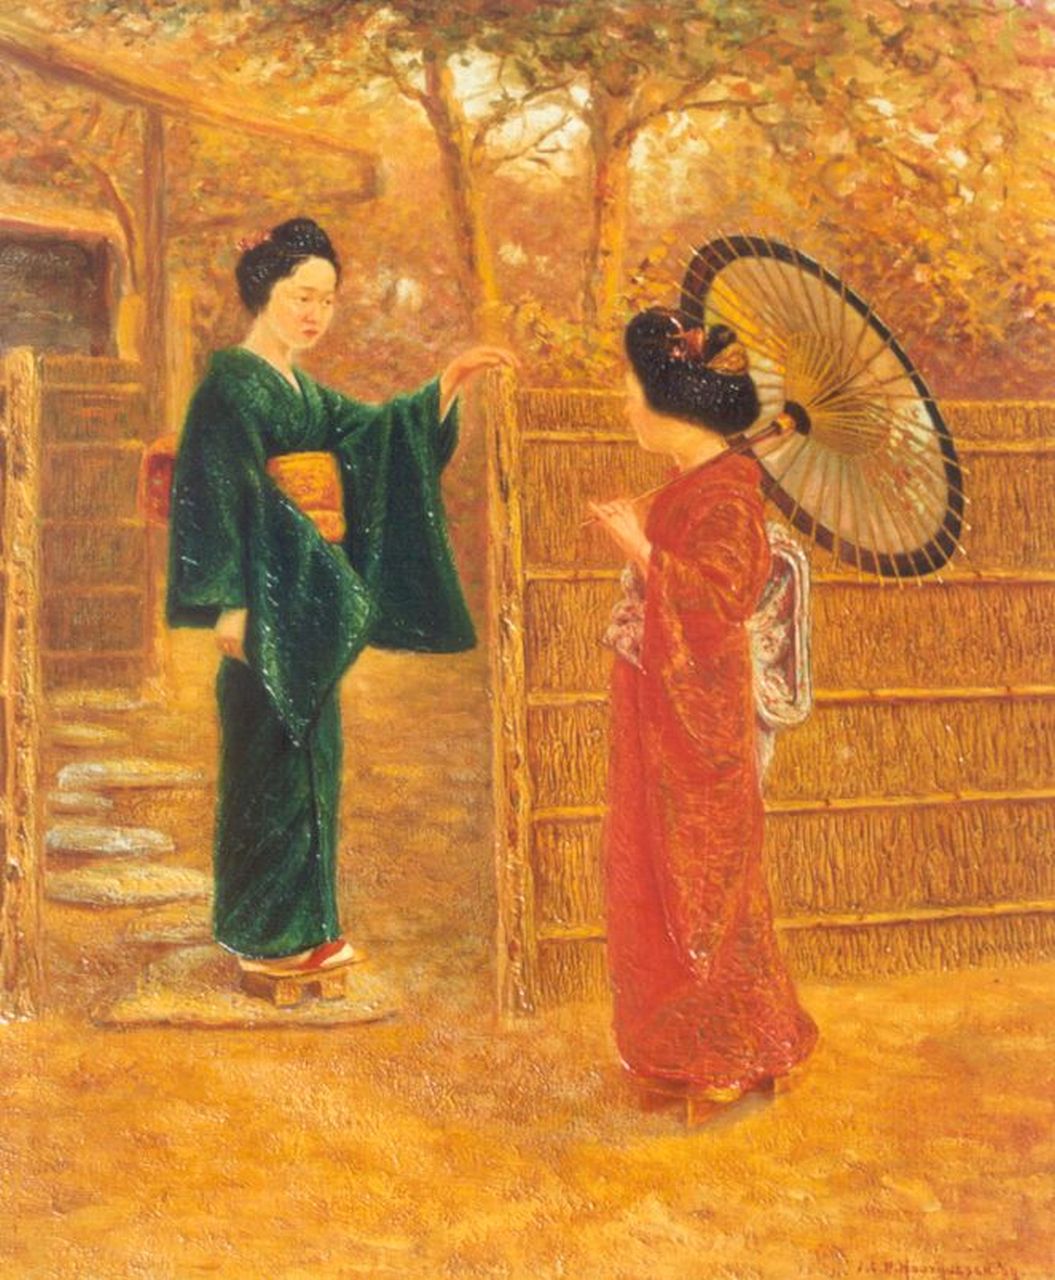 Houthuesen J.C.P.  | Houthuesen, Geishas, oil on canvas 40.3 x 33.5 cm, signed l.r.